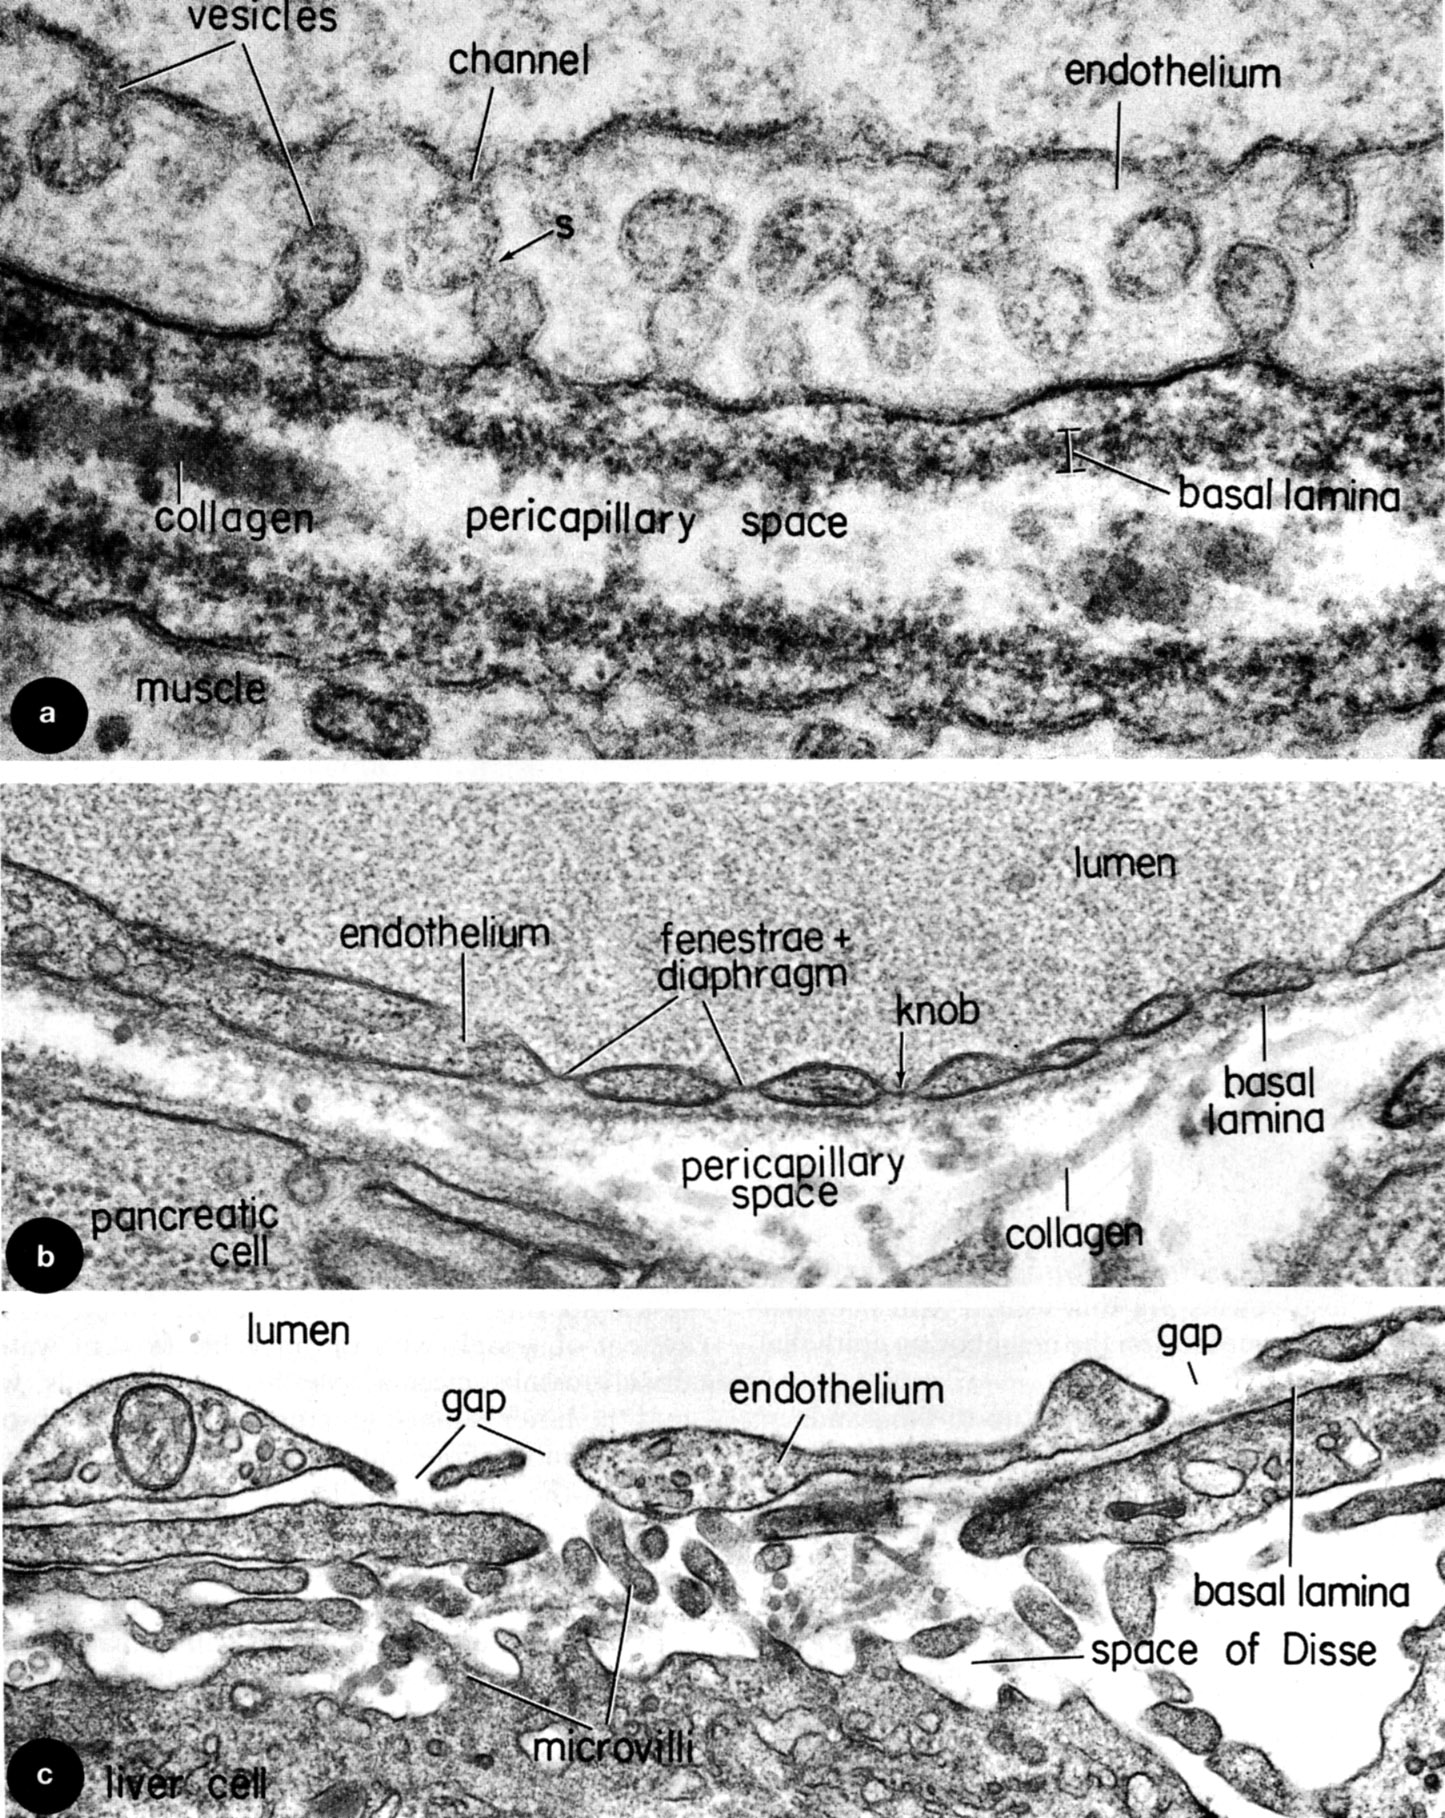 Types of capillaries